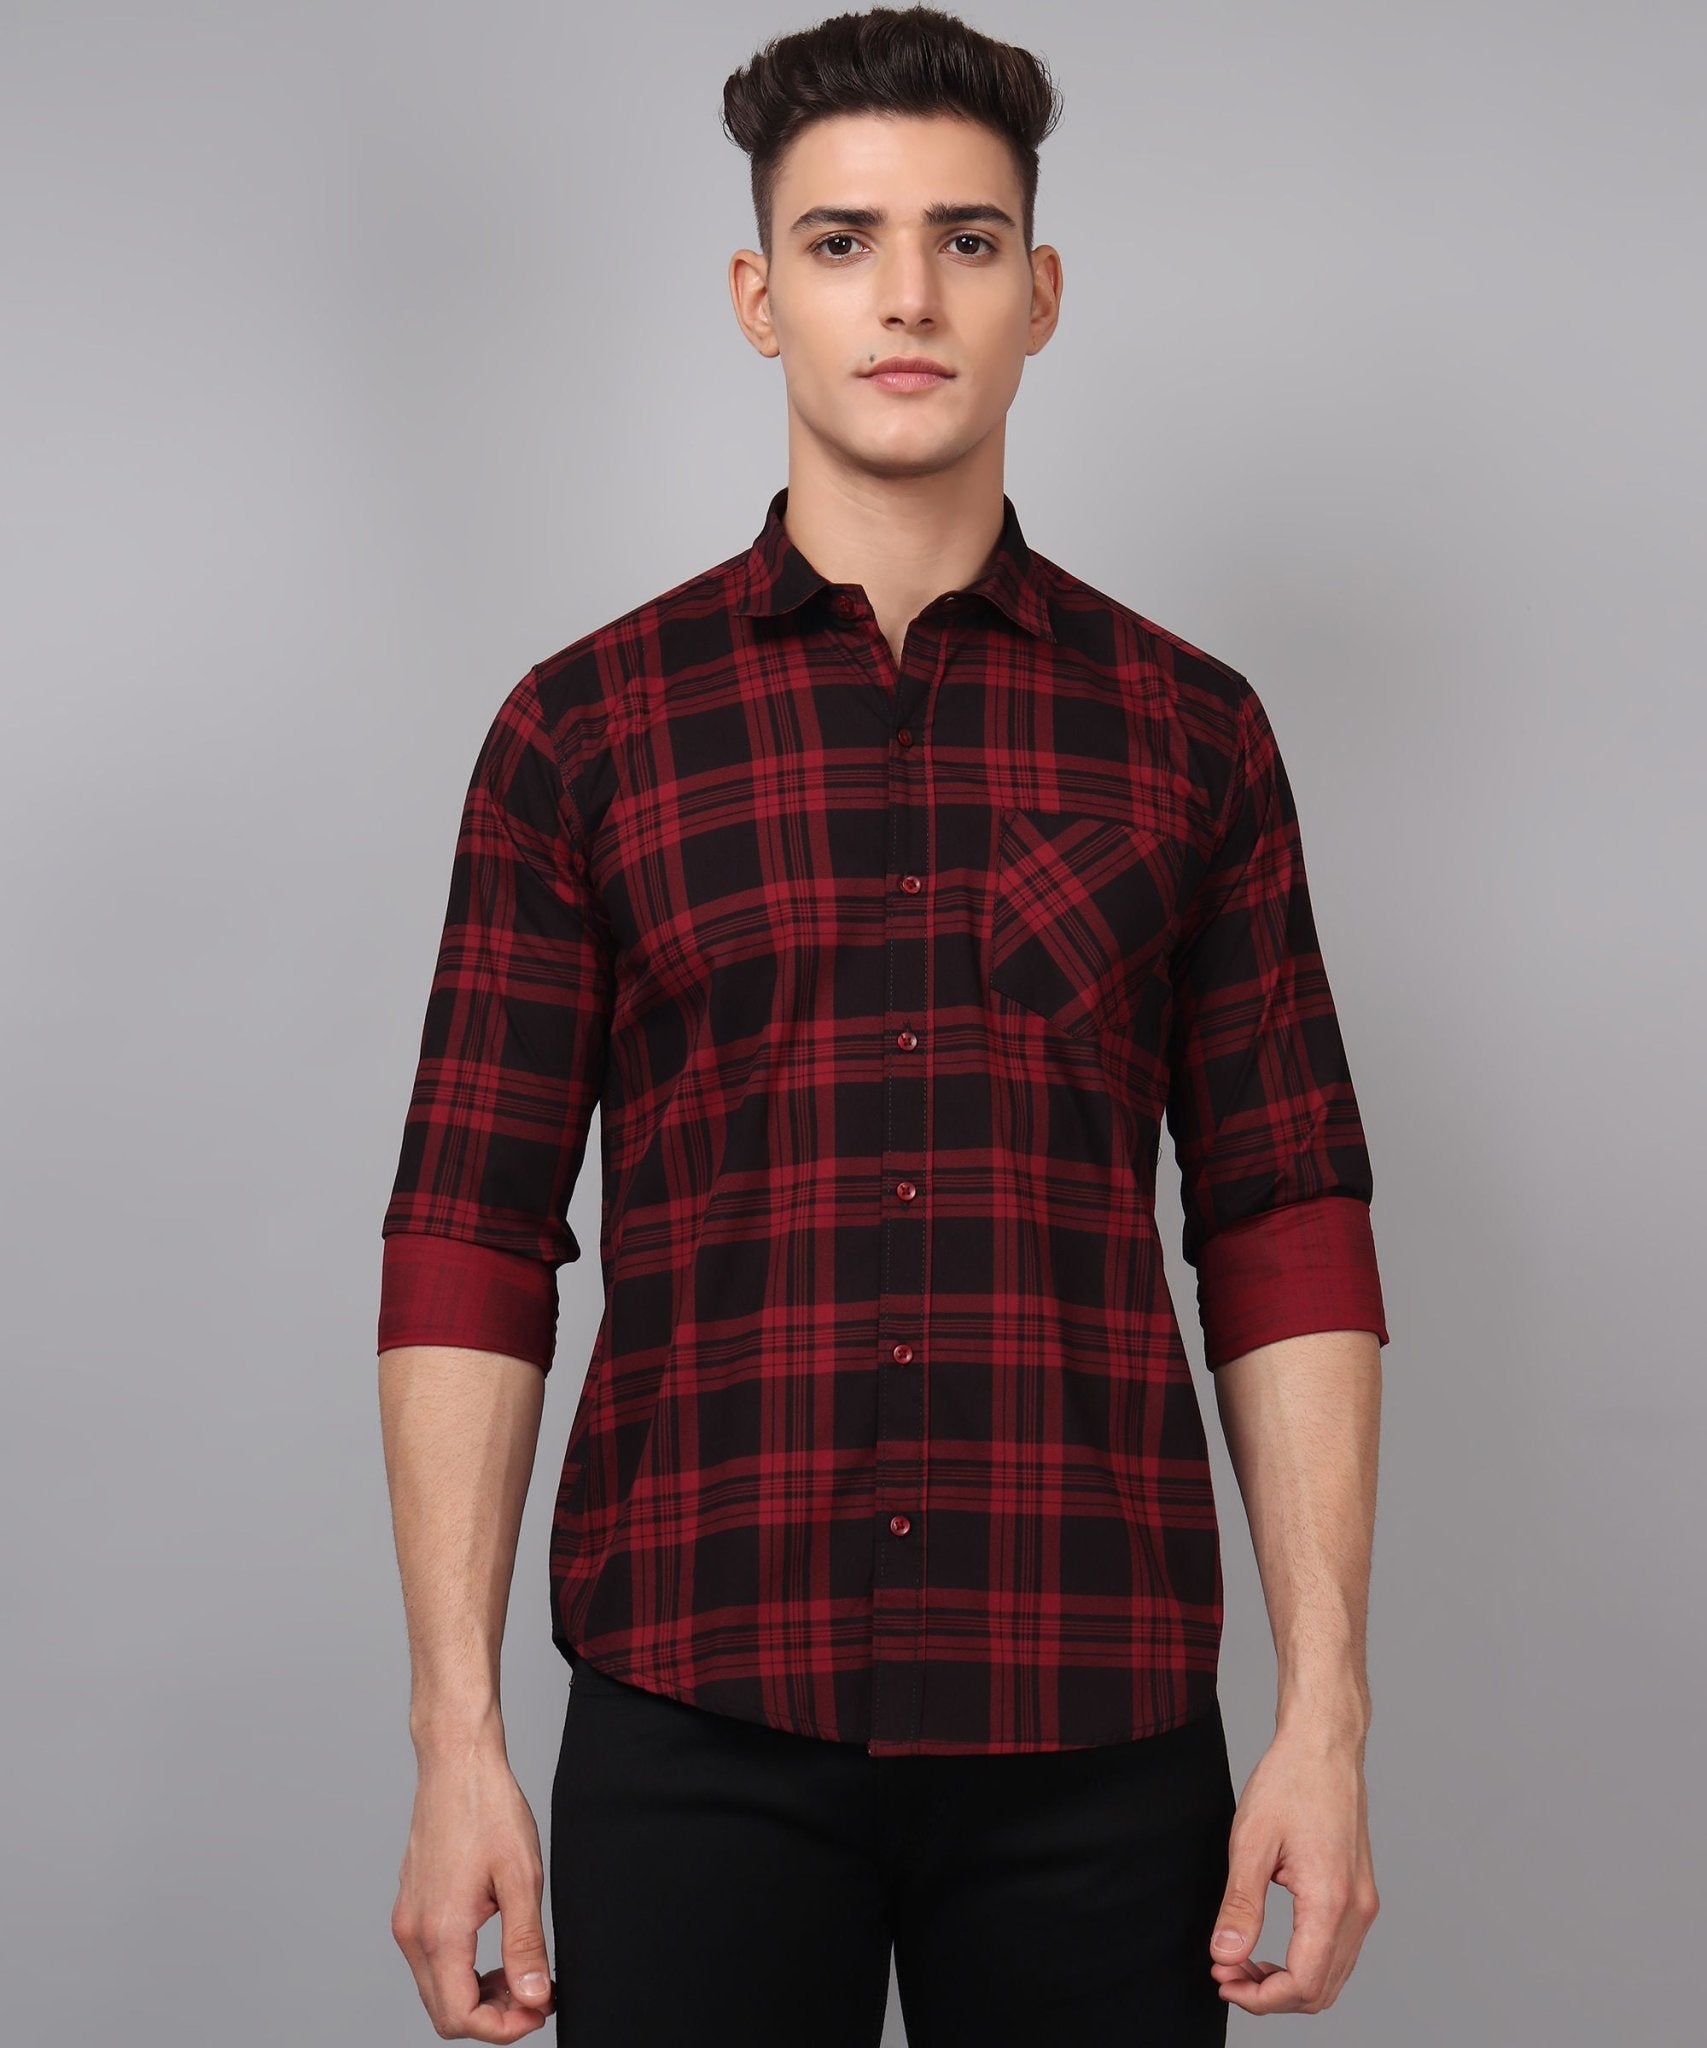 TryBuy Premium Red Black Checks Shirts for Men - TryBuy® USA🇺🇸